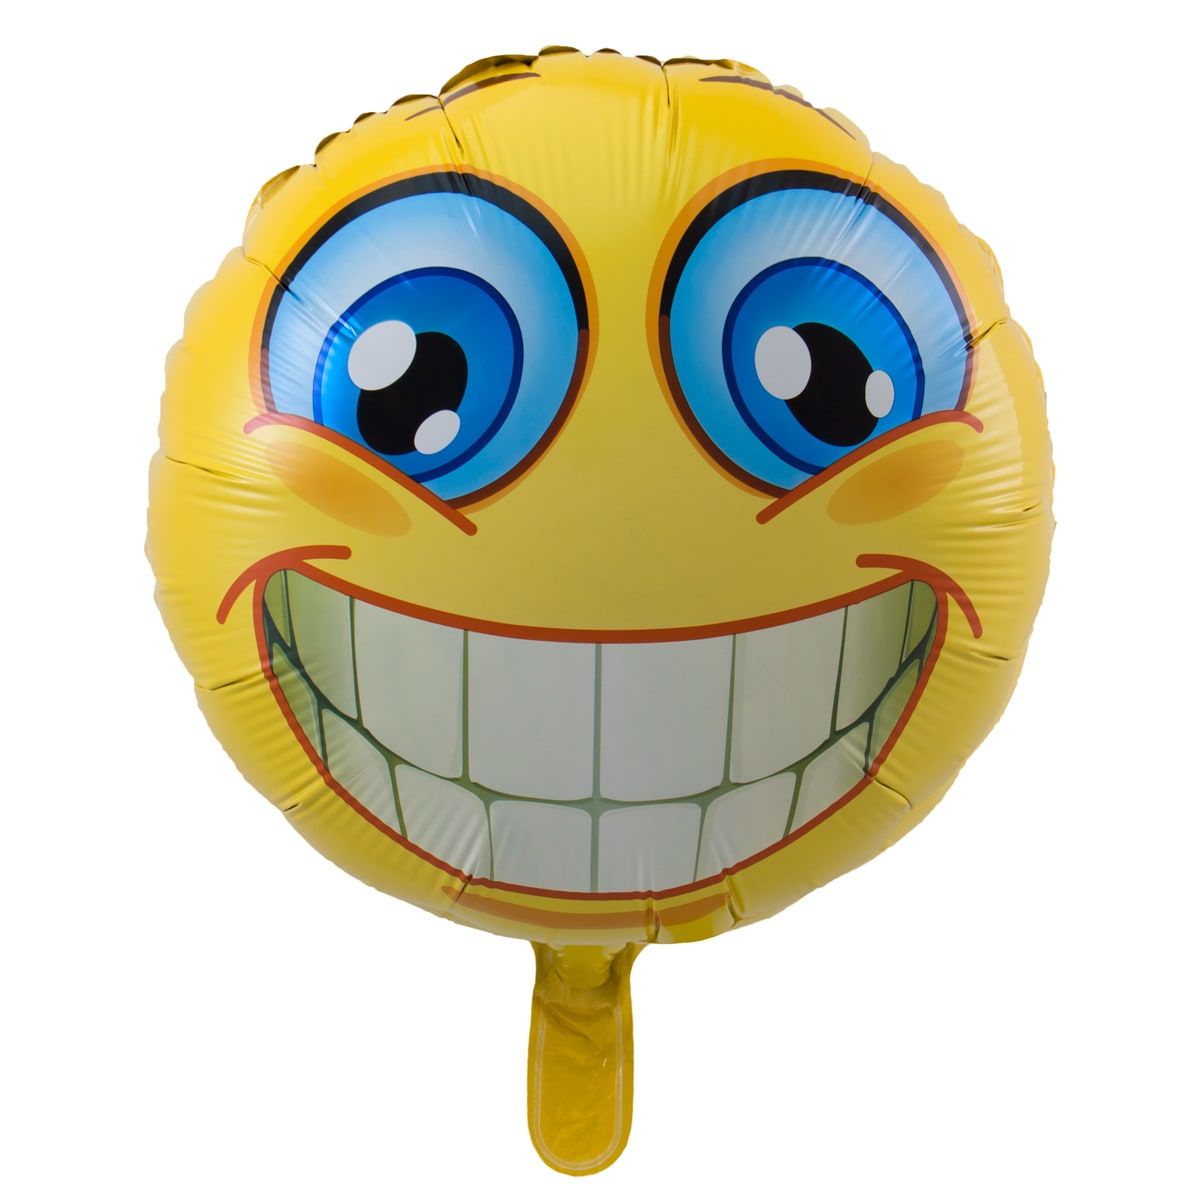 Emoticon blij lachen folieballon